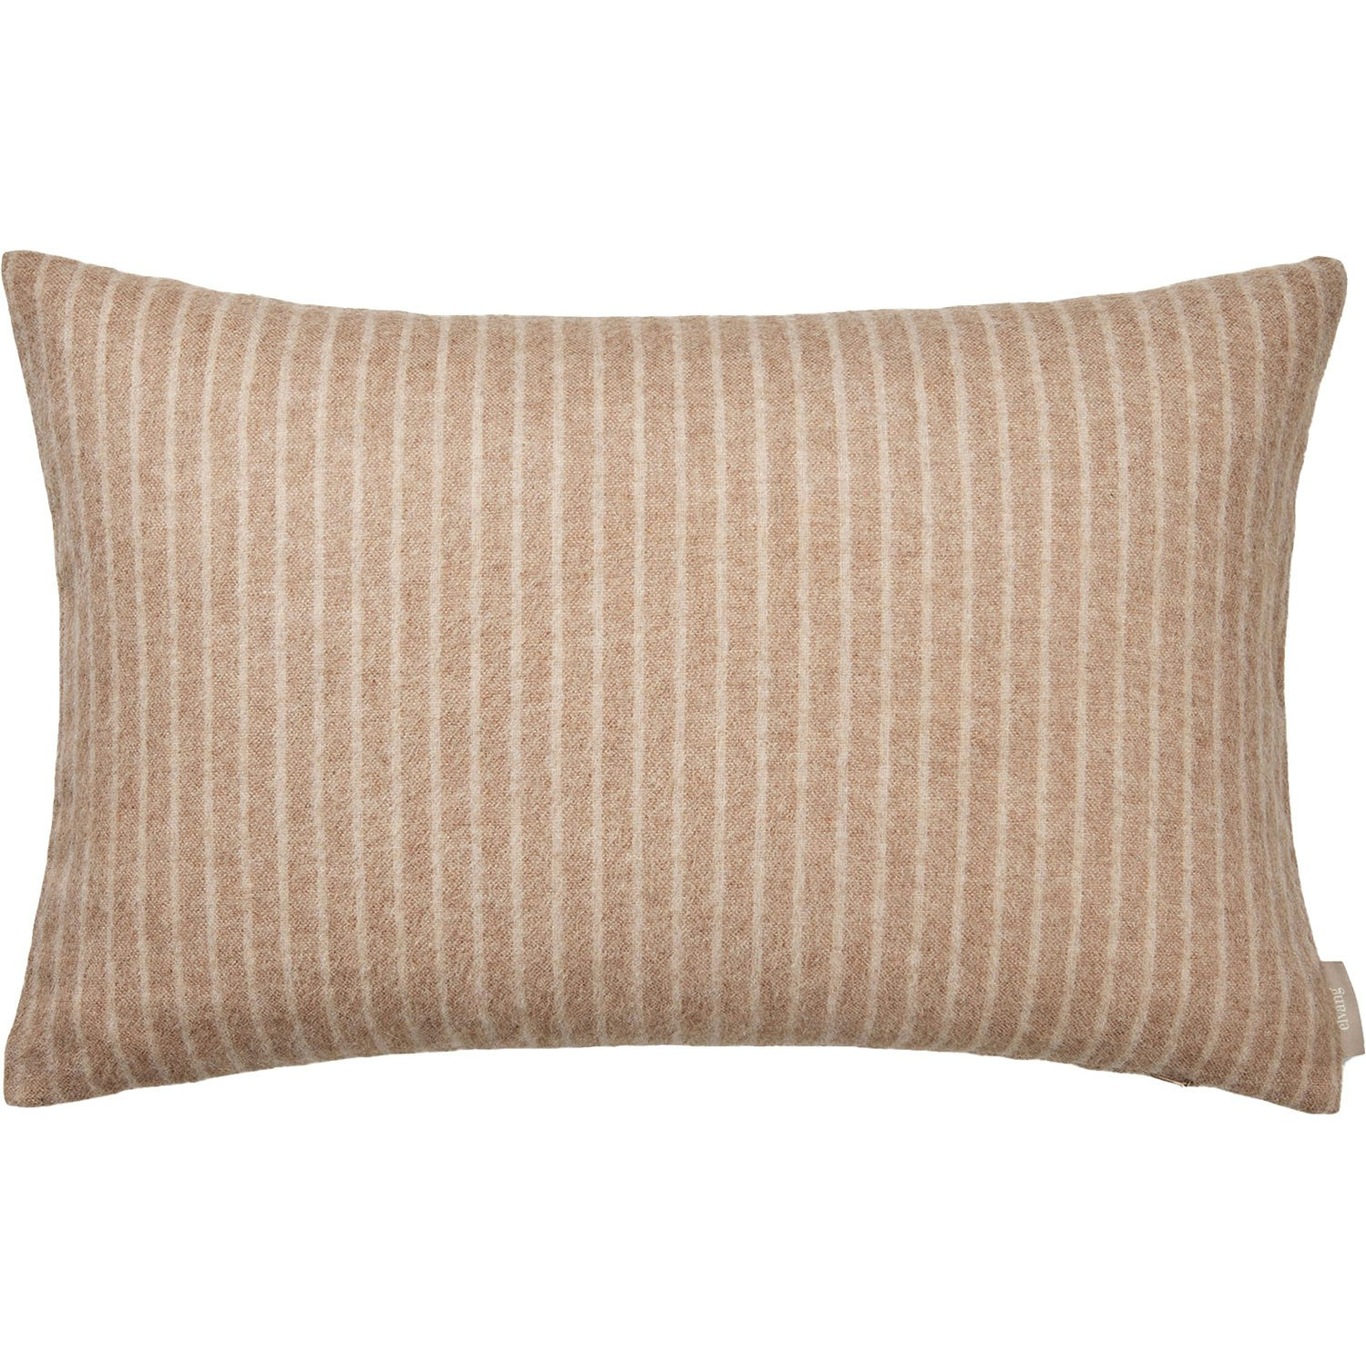 Stripes Cushion Cover 40x60 cm Camel